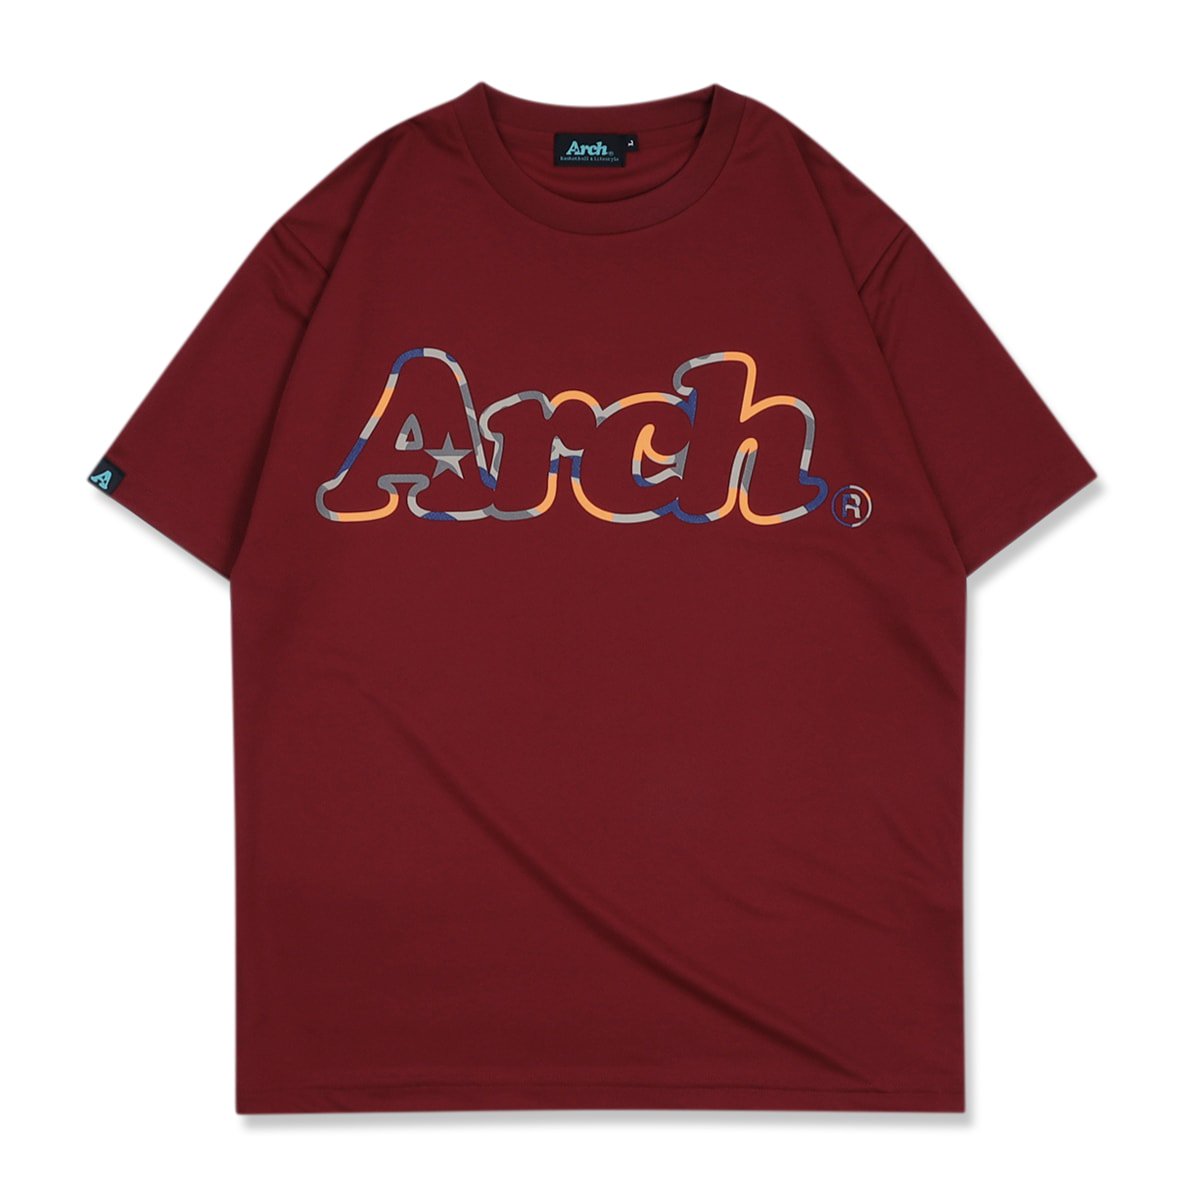 solid color shorts【dark gray】 - Arch ☆ アーチ [バスケットボール＆ライフスタイルウェア  BasketballLifestyle wear]